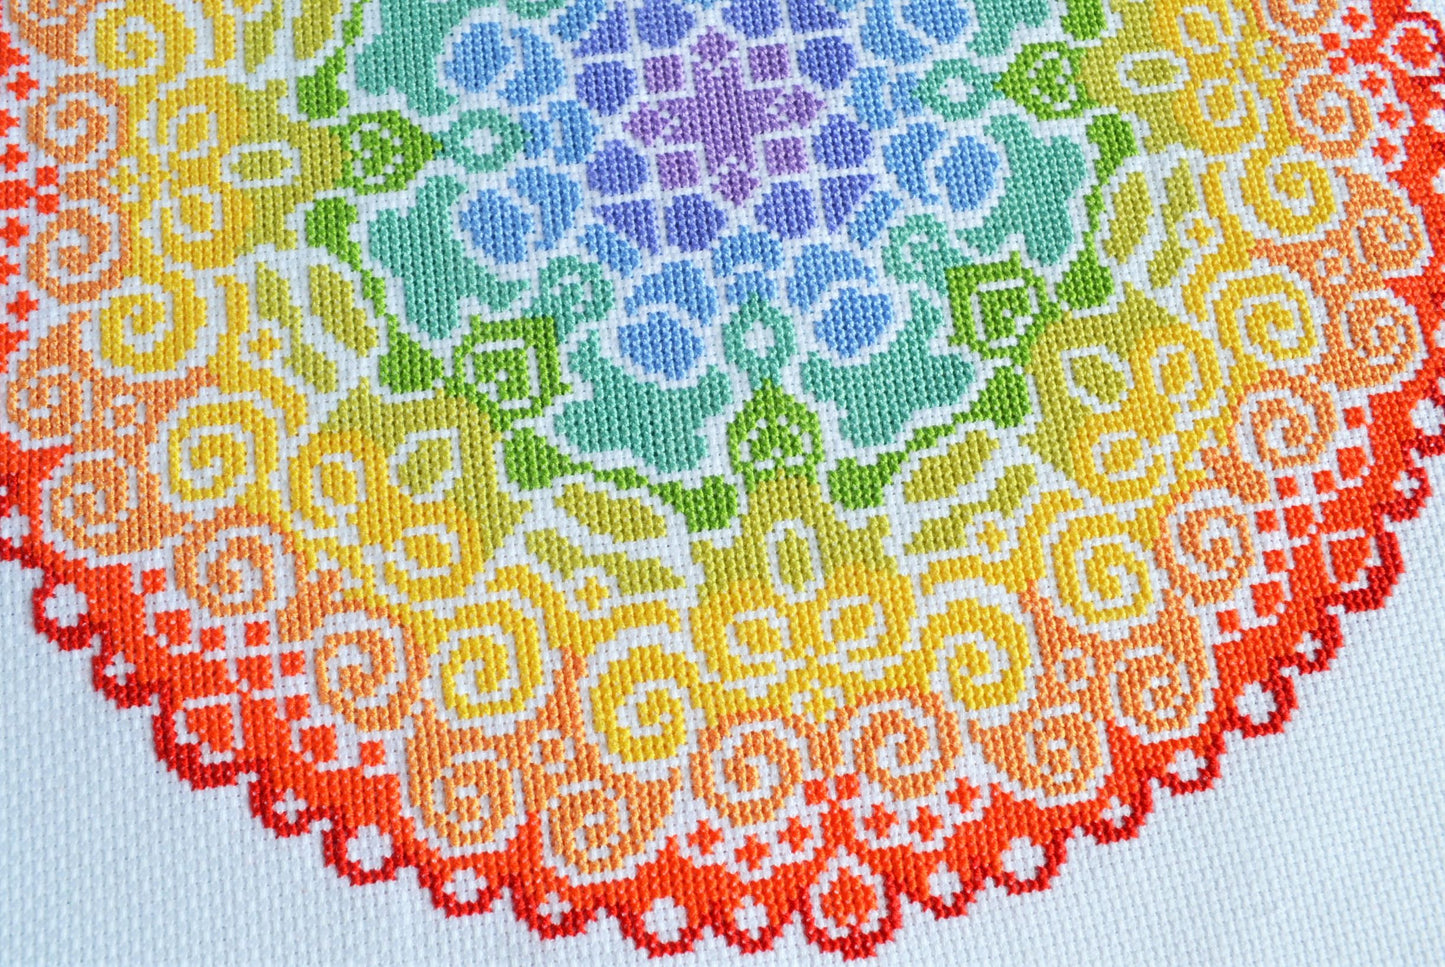 Spectrum Mandala Cross Stitch Kit